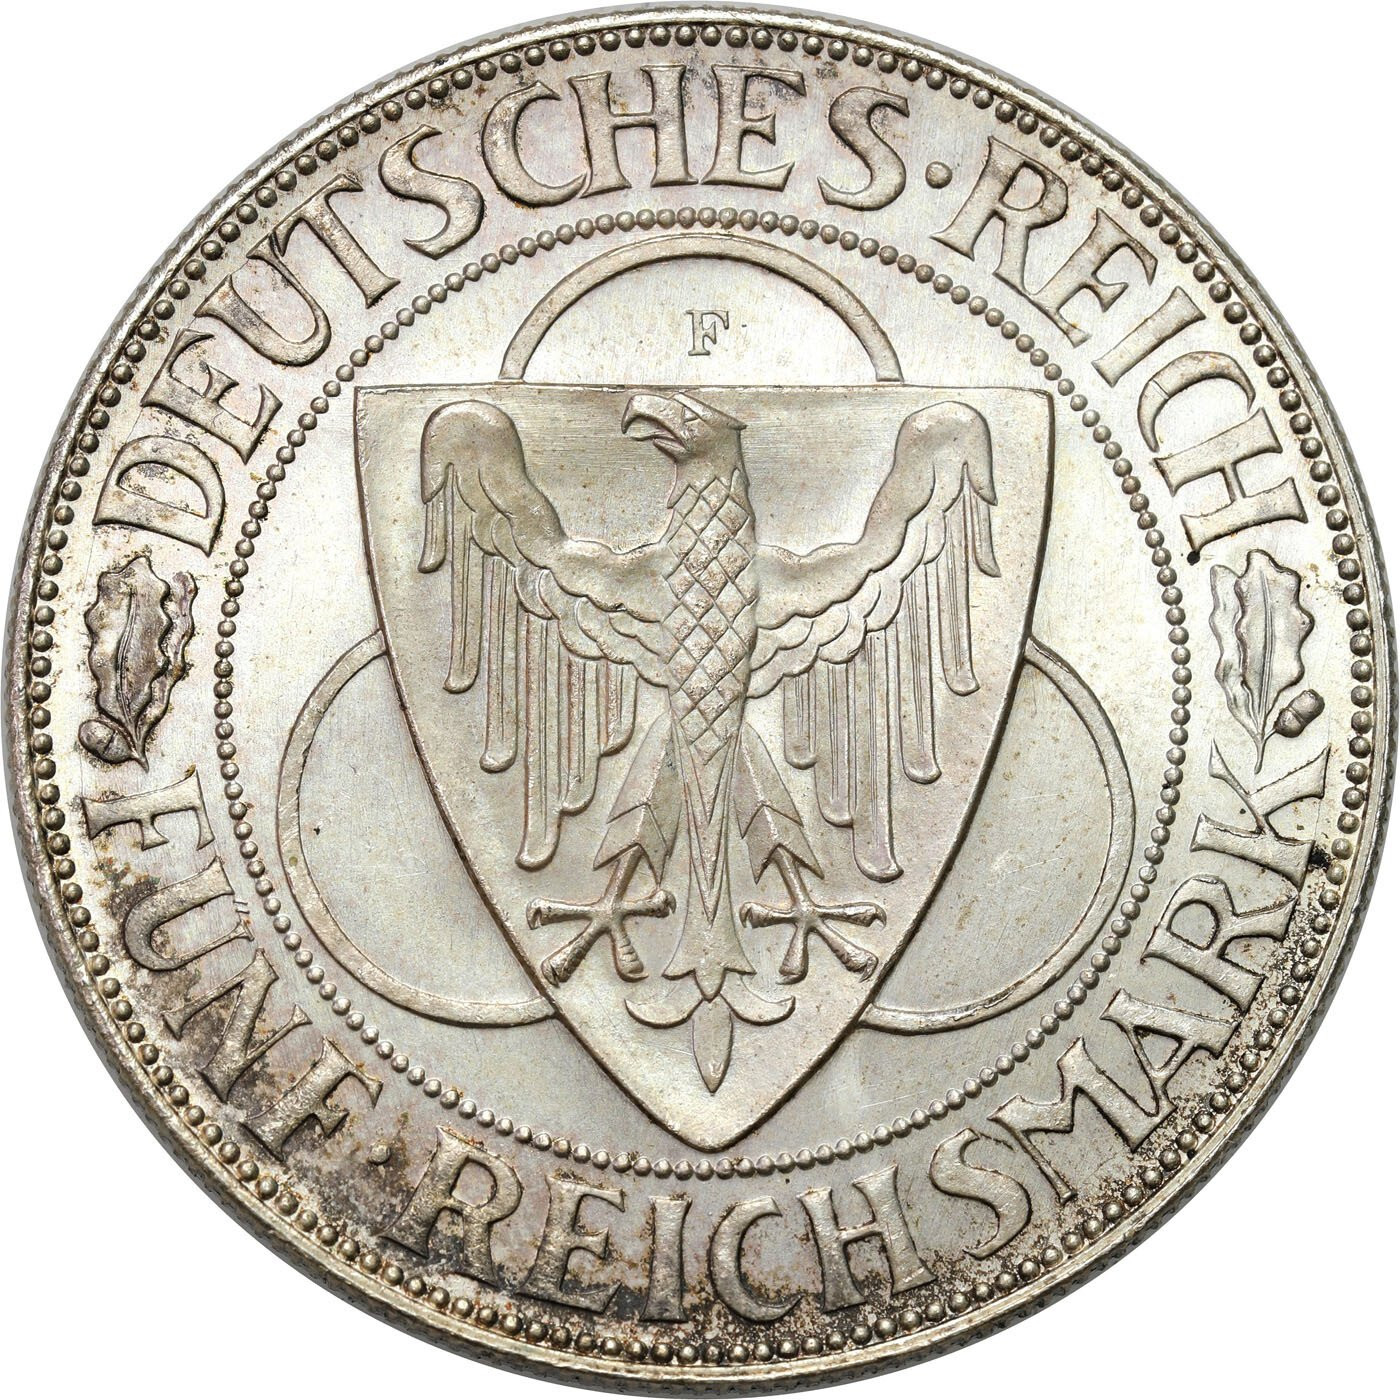 Niemcy, Weimar. 5 marek 1930 F, Stuttgart - PIĘKNE